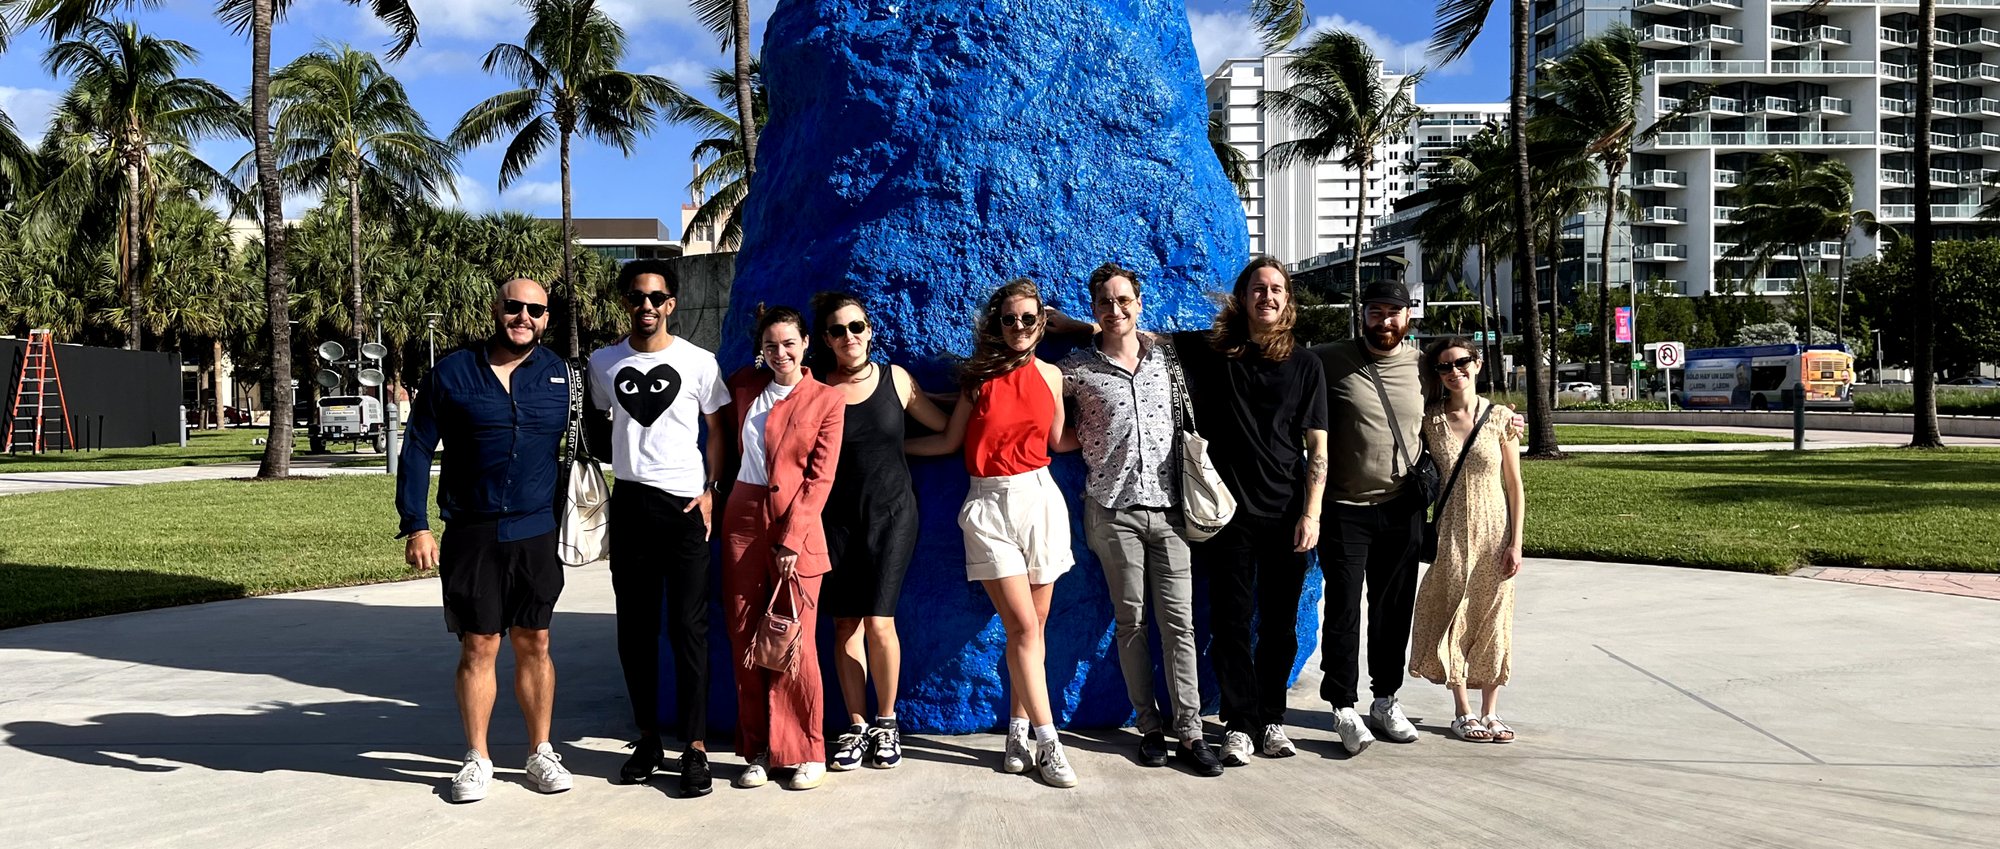 The team at Art Basel Miami